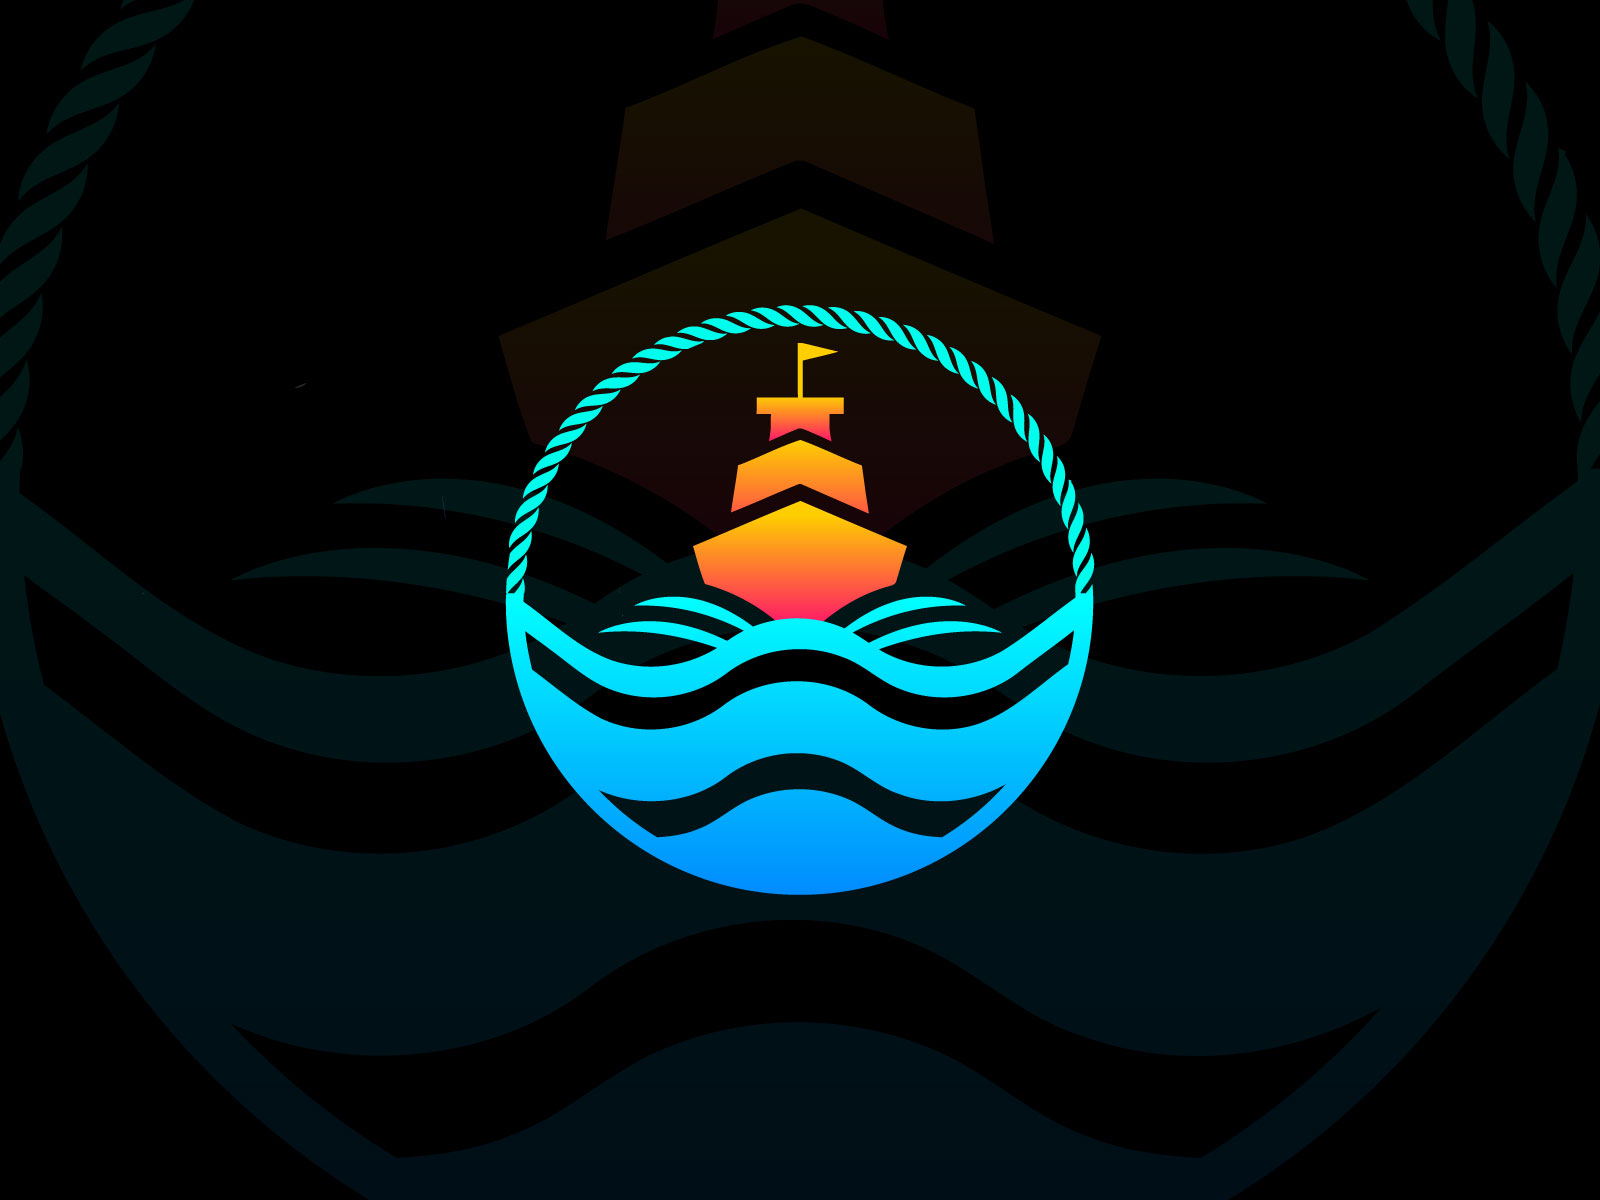 Ship Logo by Md Amran Hossain on Dribbble